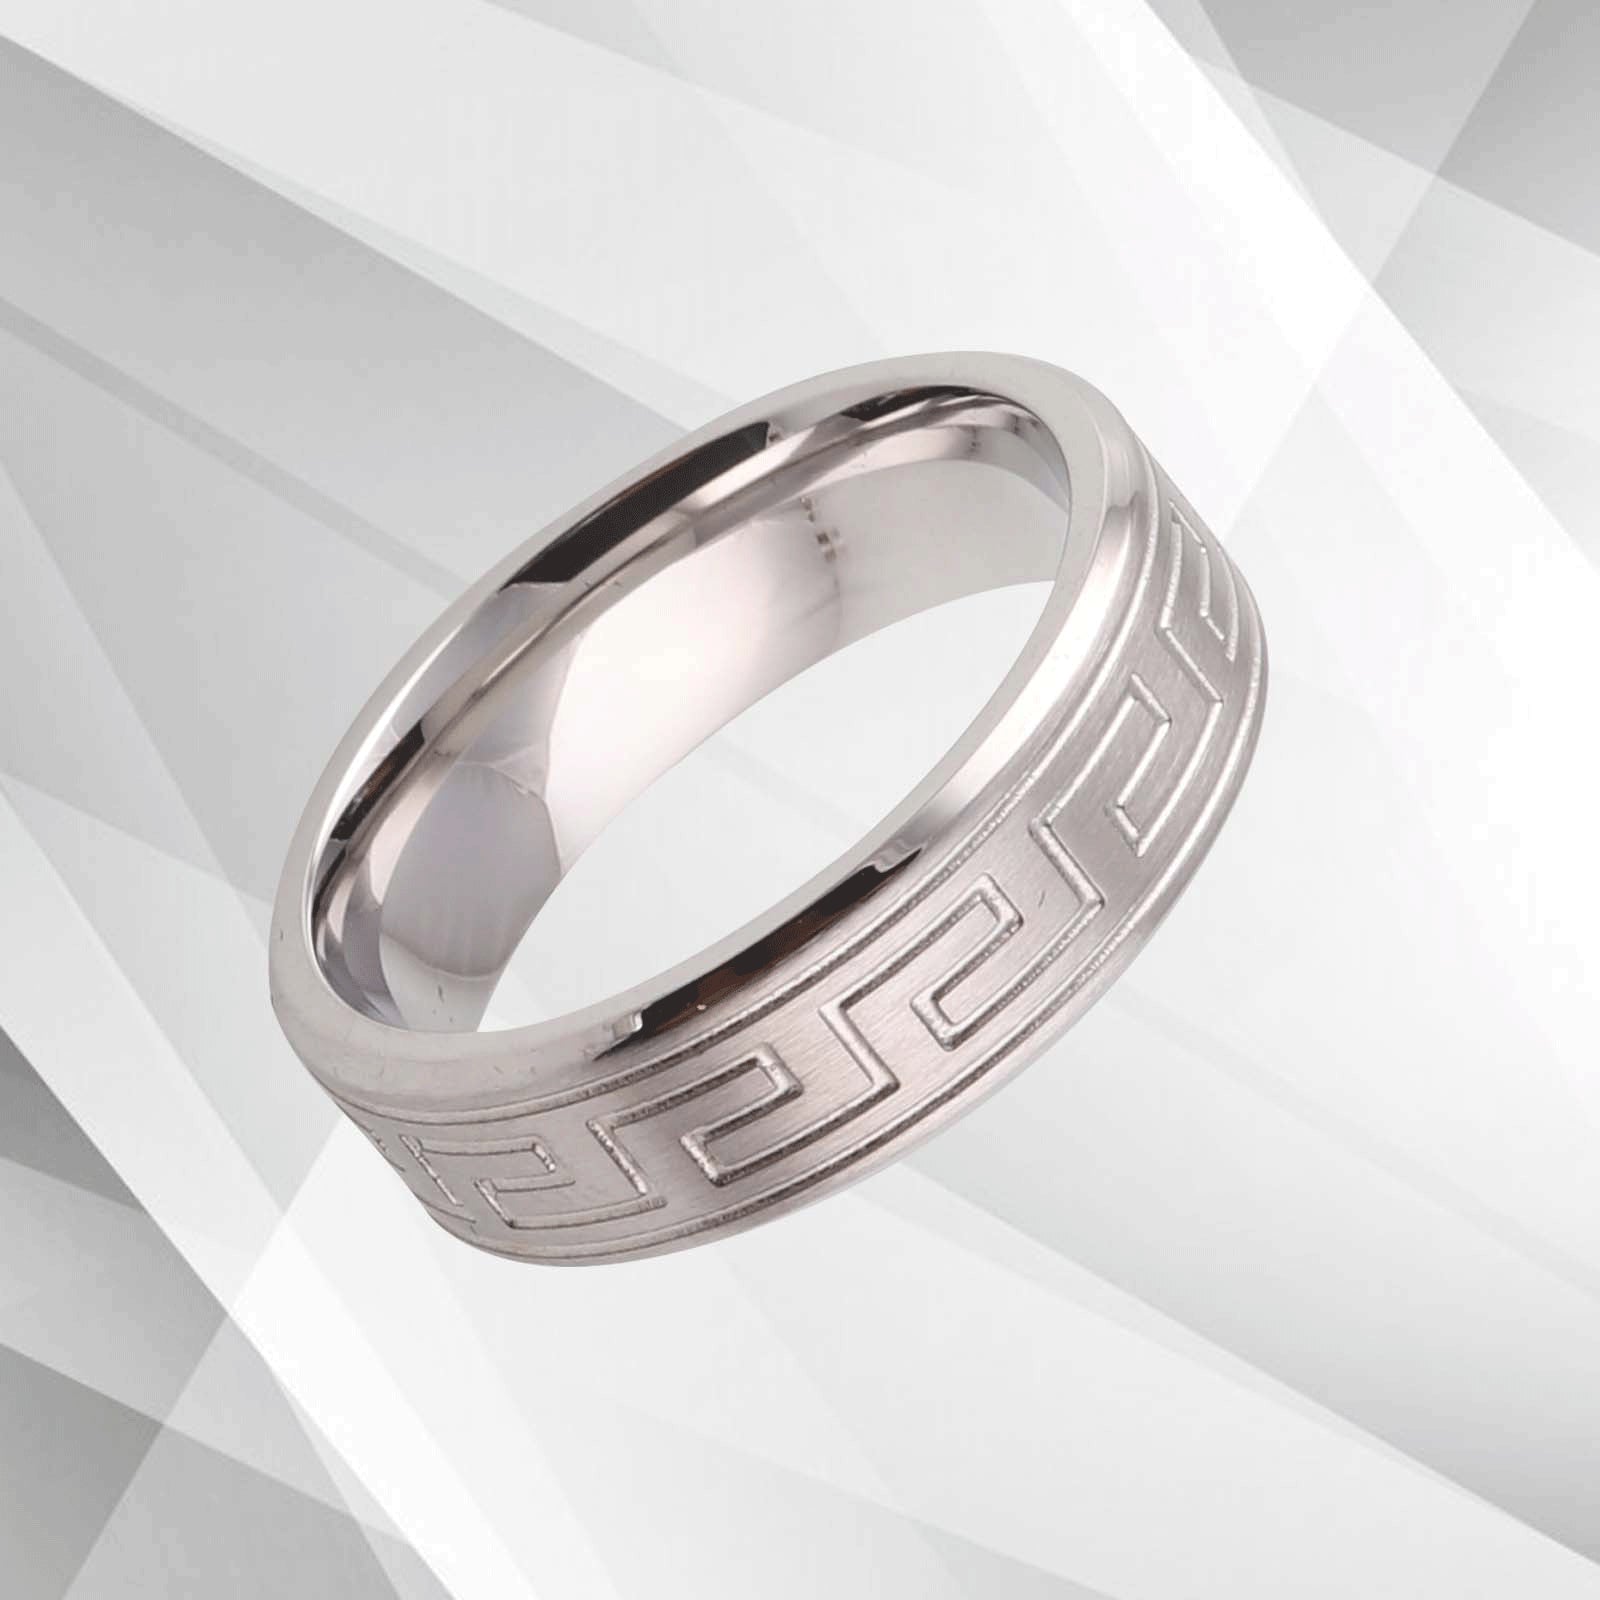 Hypoallergenic Tungsten Carbide Wedding Band - 7mm Wide, Matt and Sparkling Finish, Comfort Fit - Men's Engagement Ring - Jewelry & Watches - Bijou Her -  -  - 